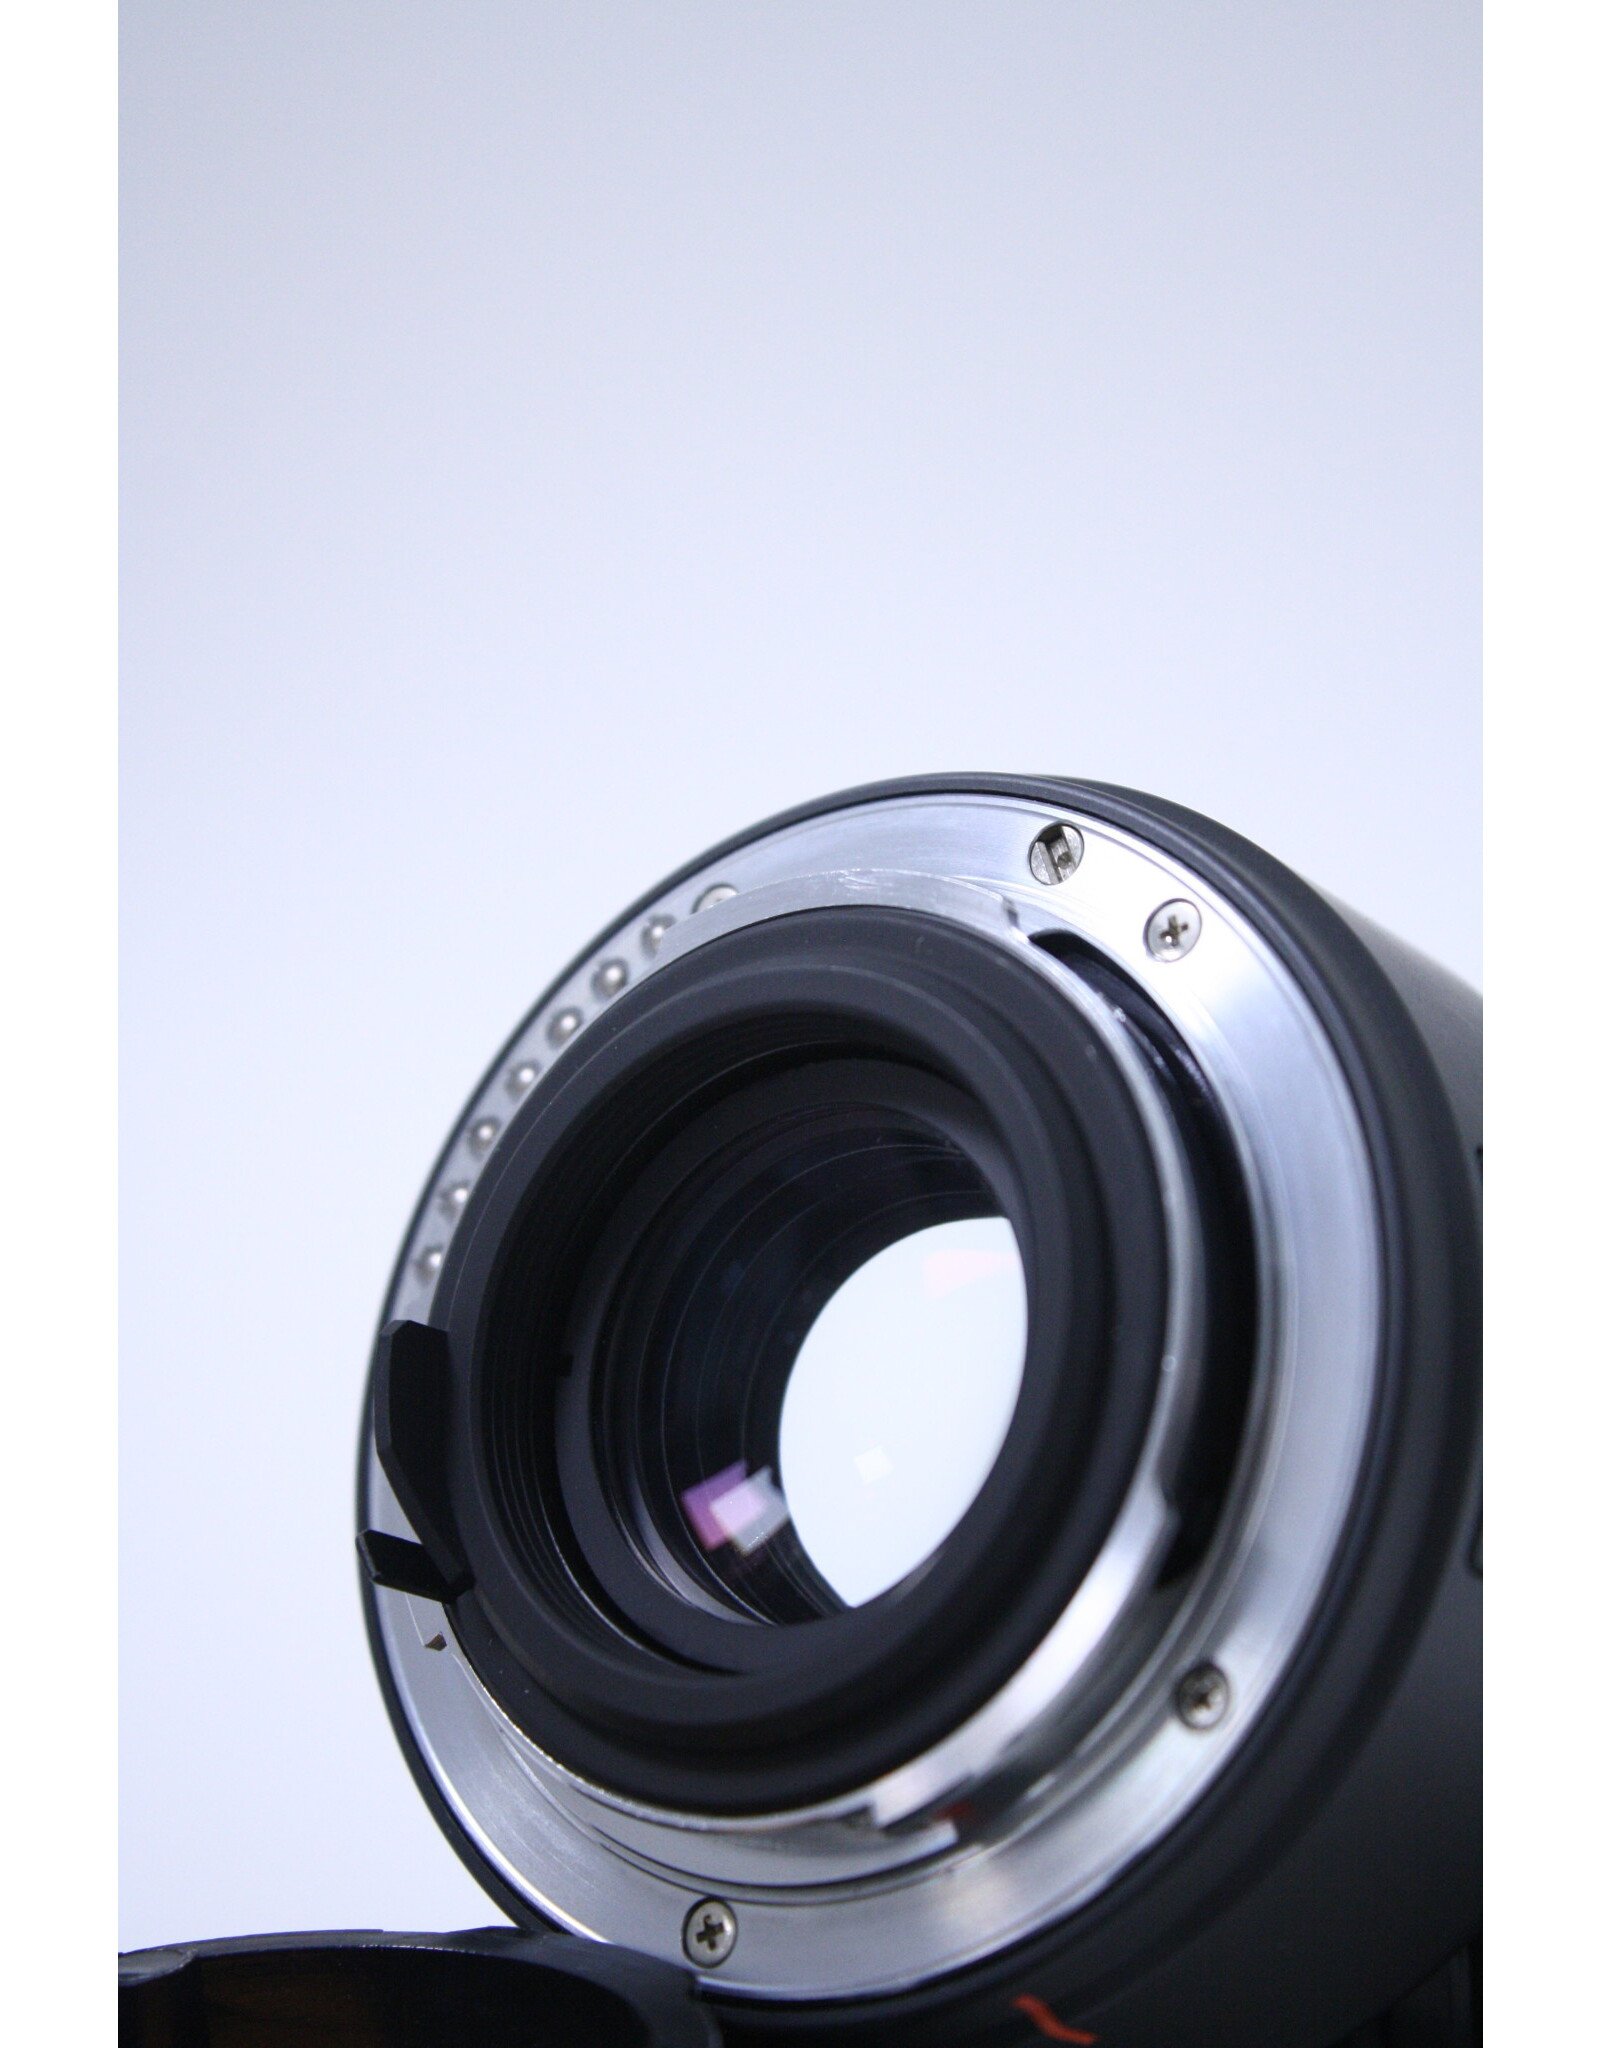 Pentax SMC Pentax-F 1.7x AF Adapter Teleconverter Lens (Pre-owned)